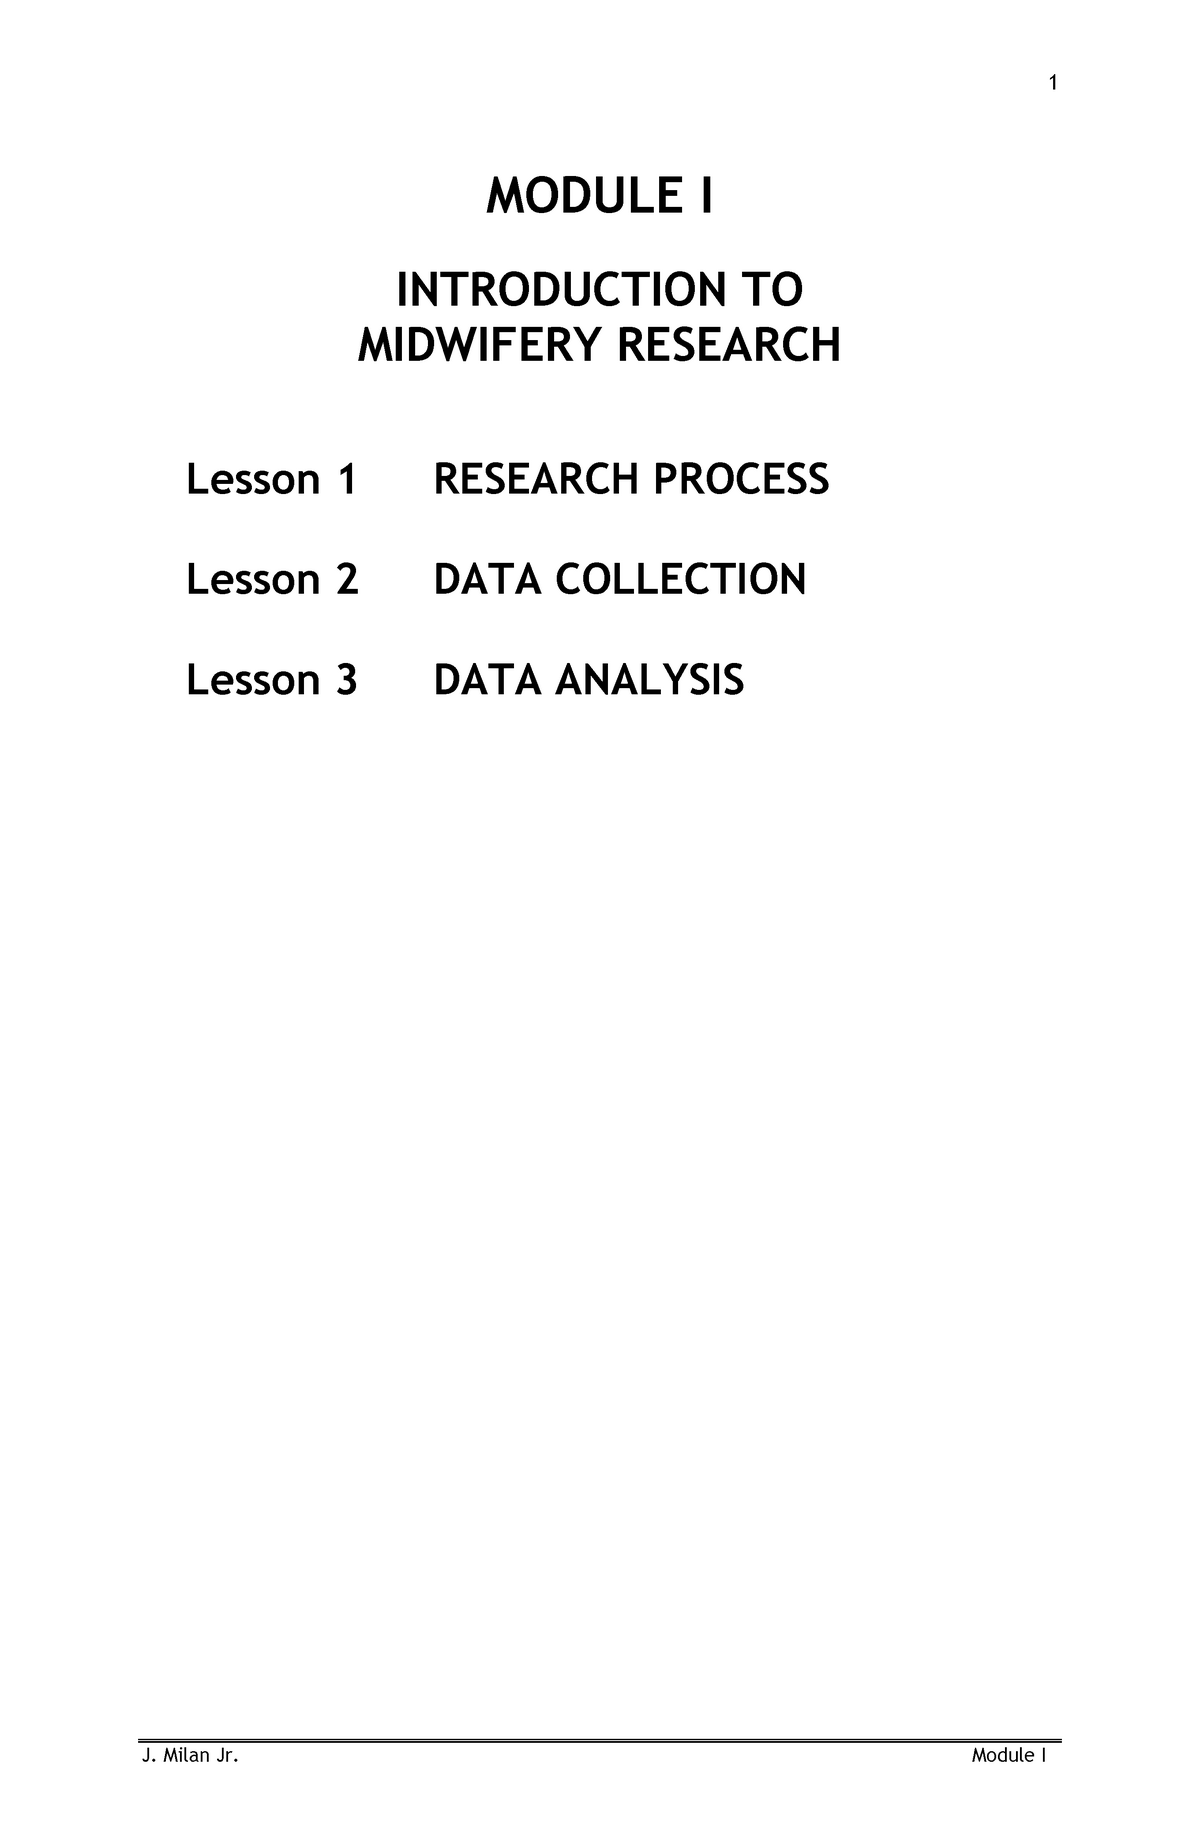 midwifery research proposal topics